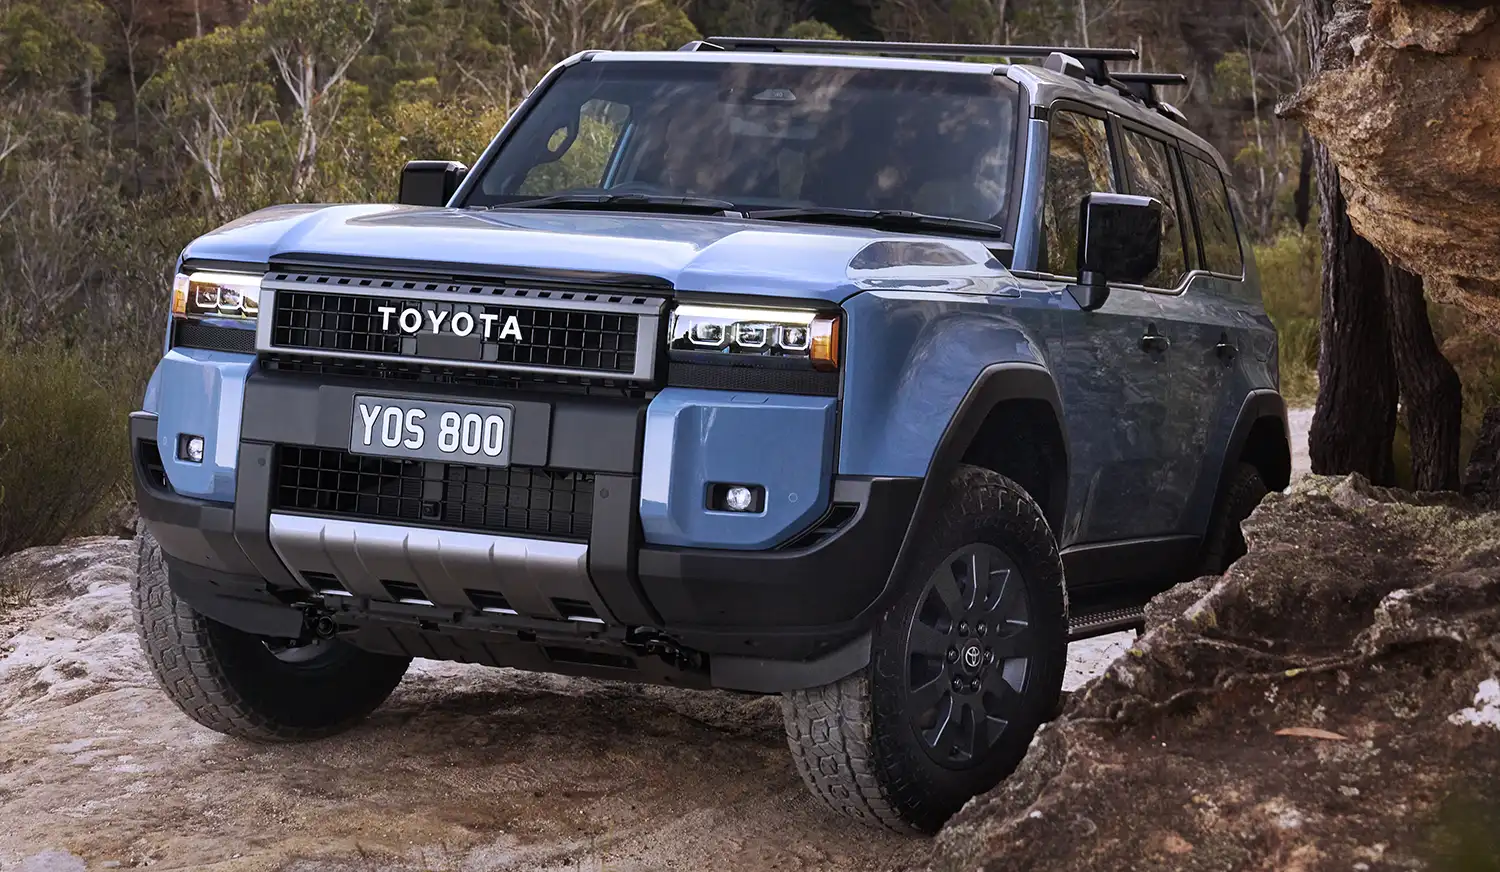 Toyota LandCruiser Prado – Australia’s Specs and Features Revealed